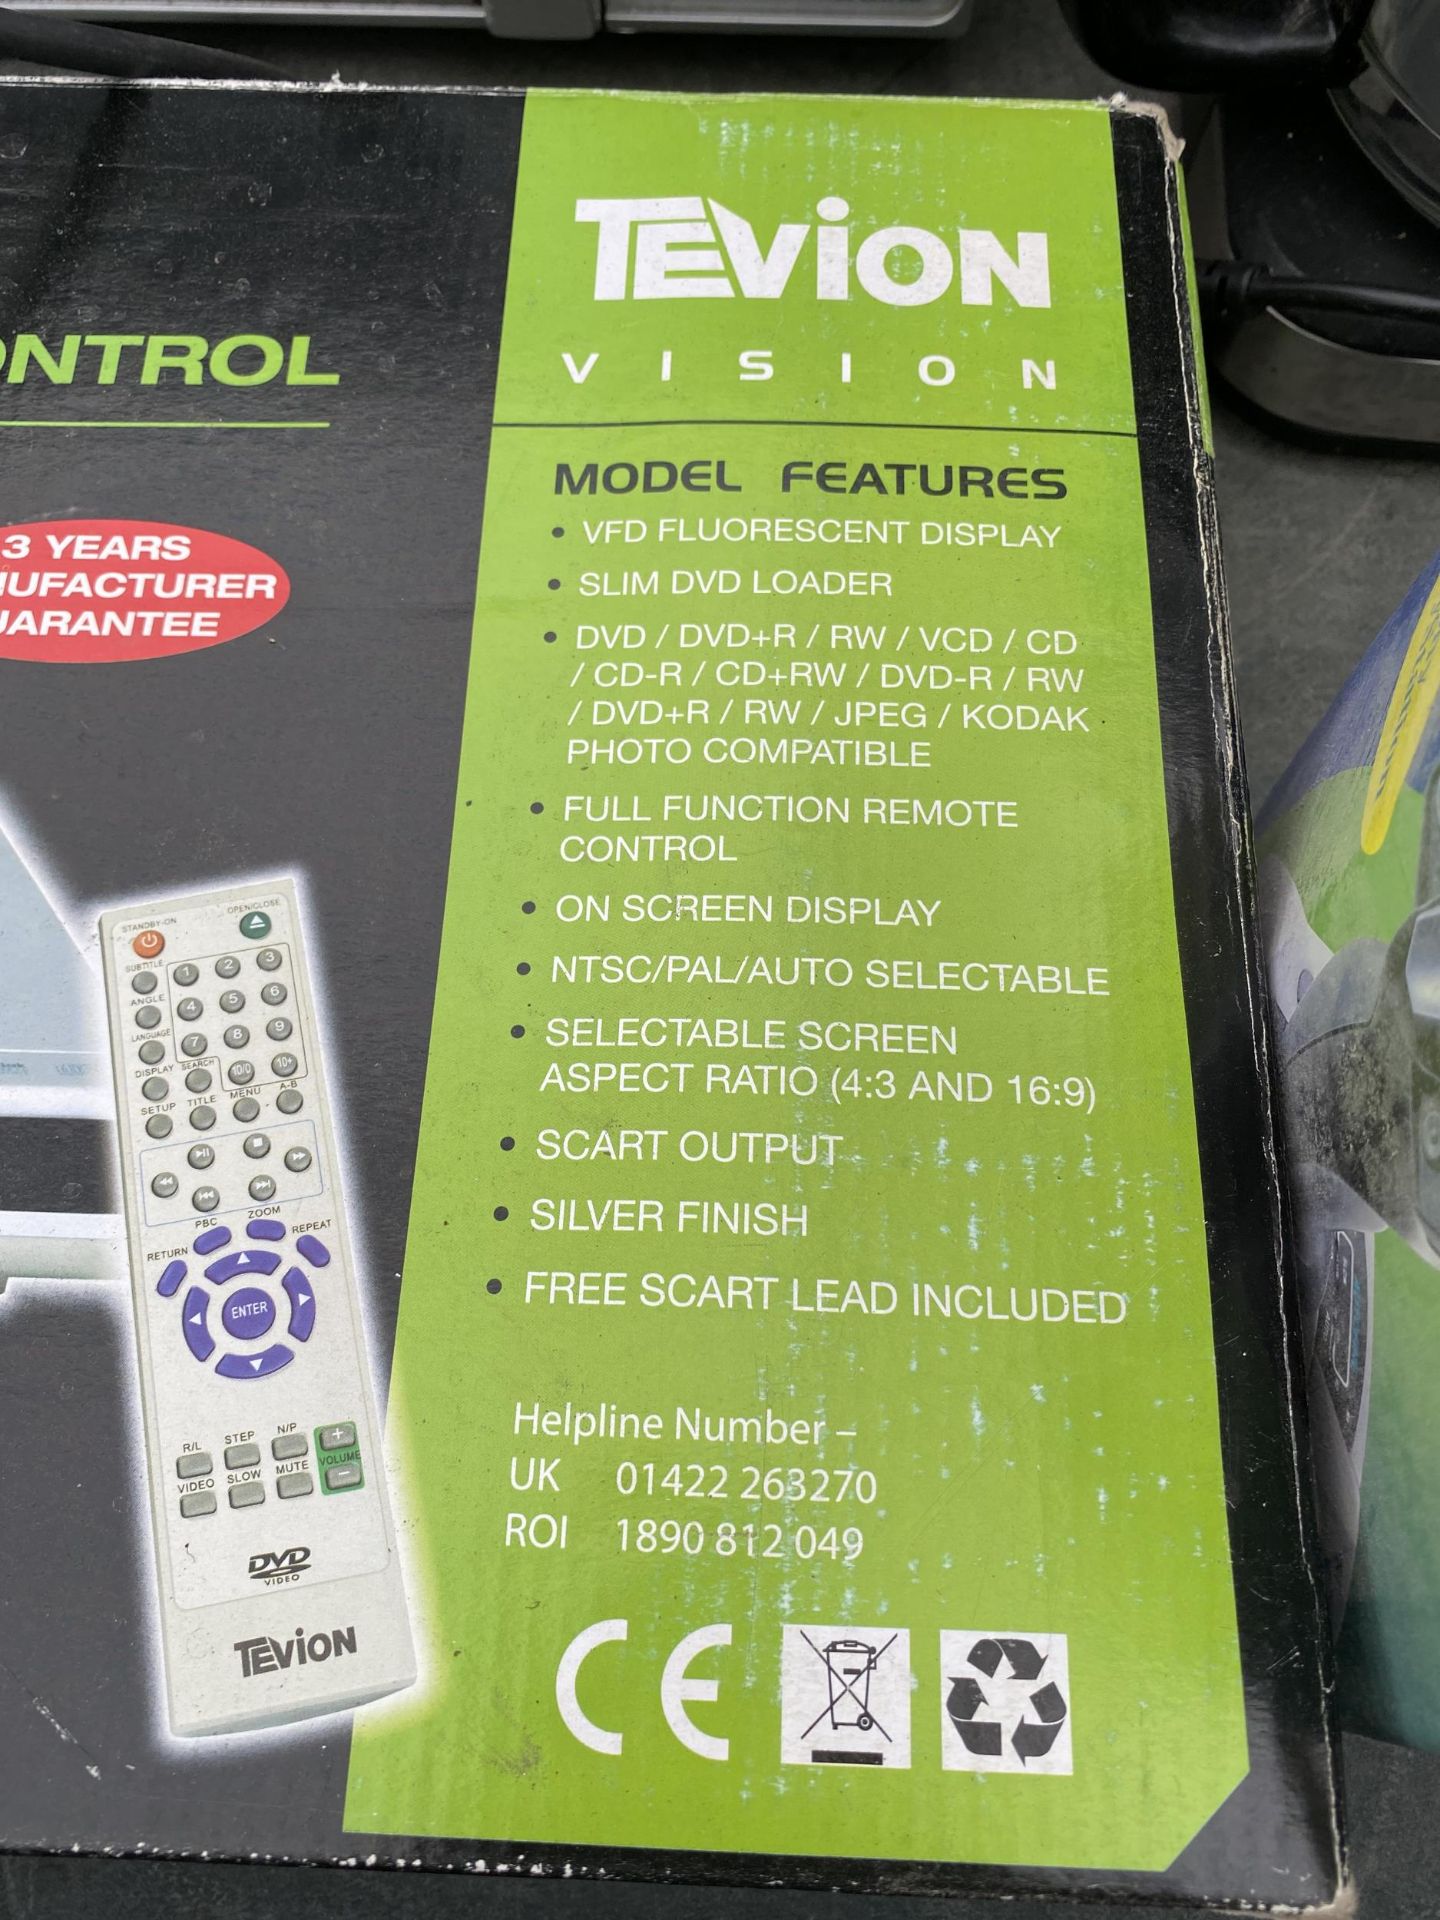 A TEVION DVD PLAYER, A JOYSTICK AND A PS2 CONTROLLER - Bild 2 aus 3